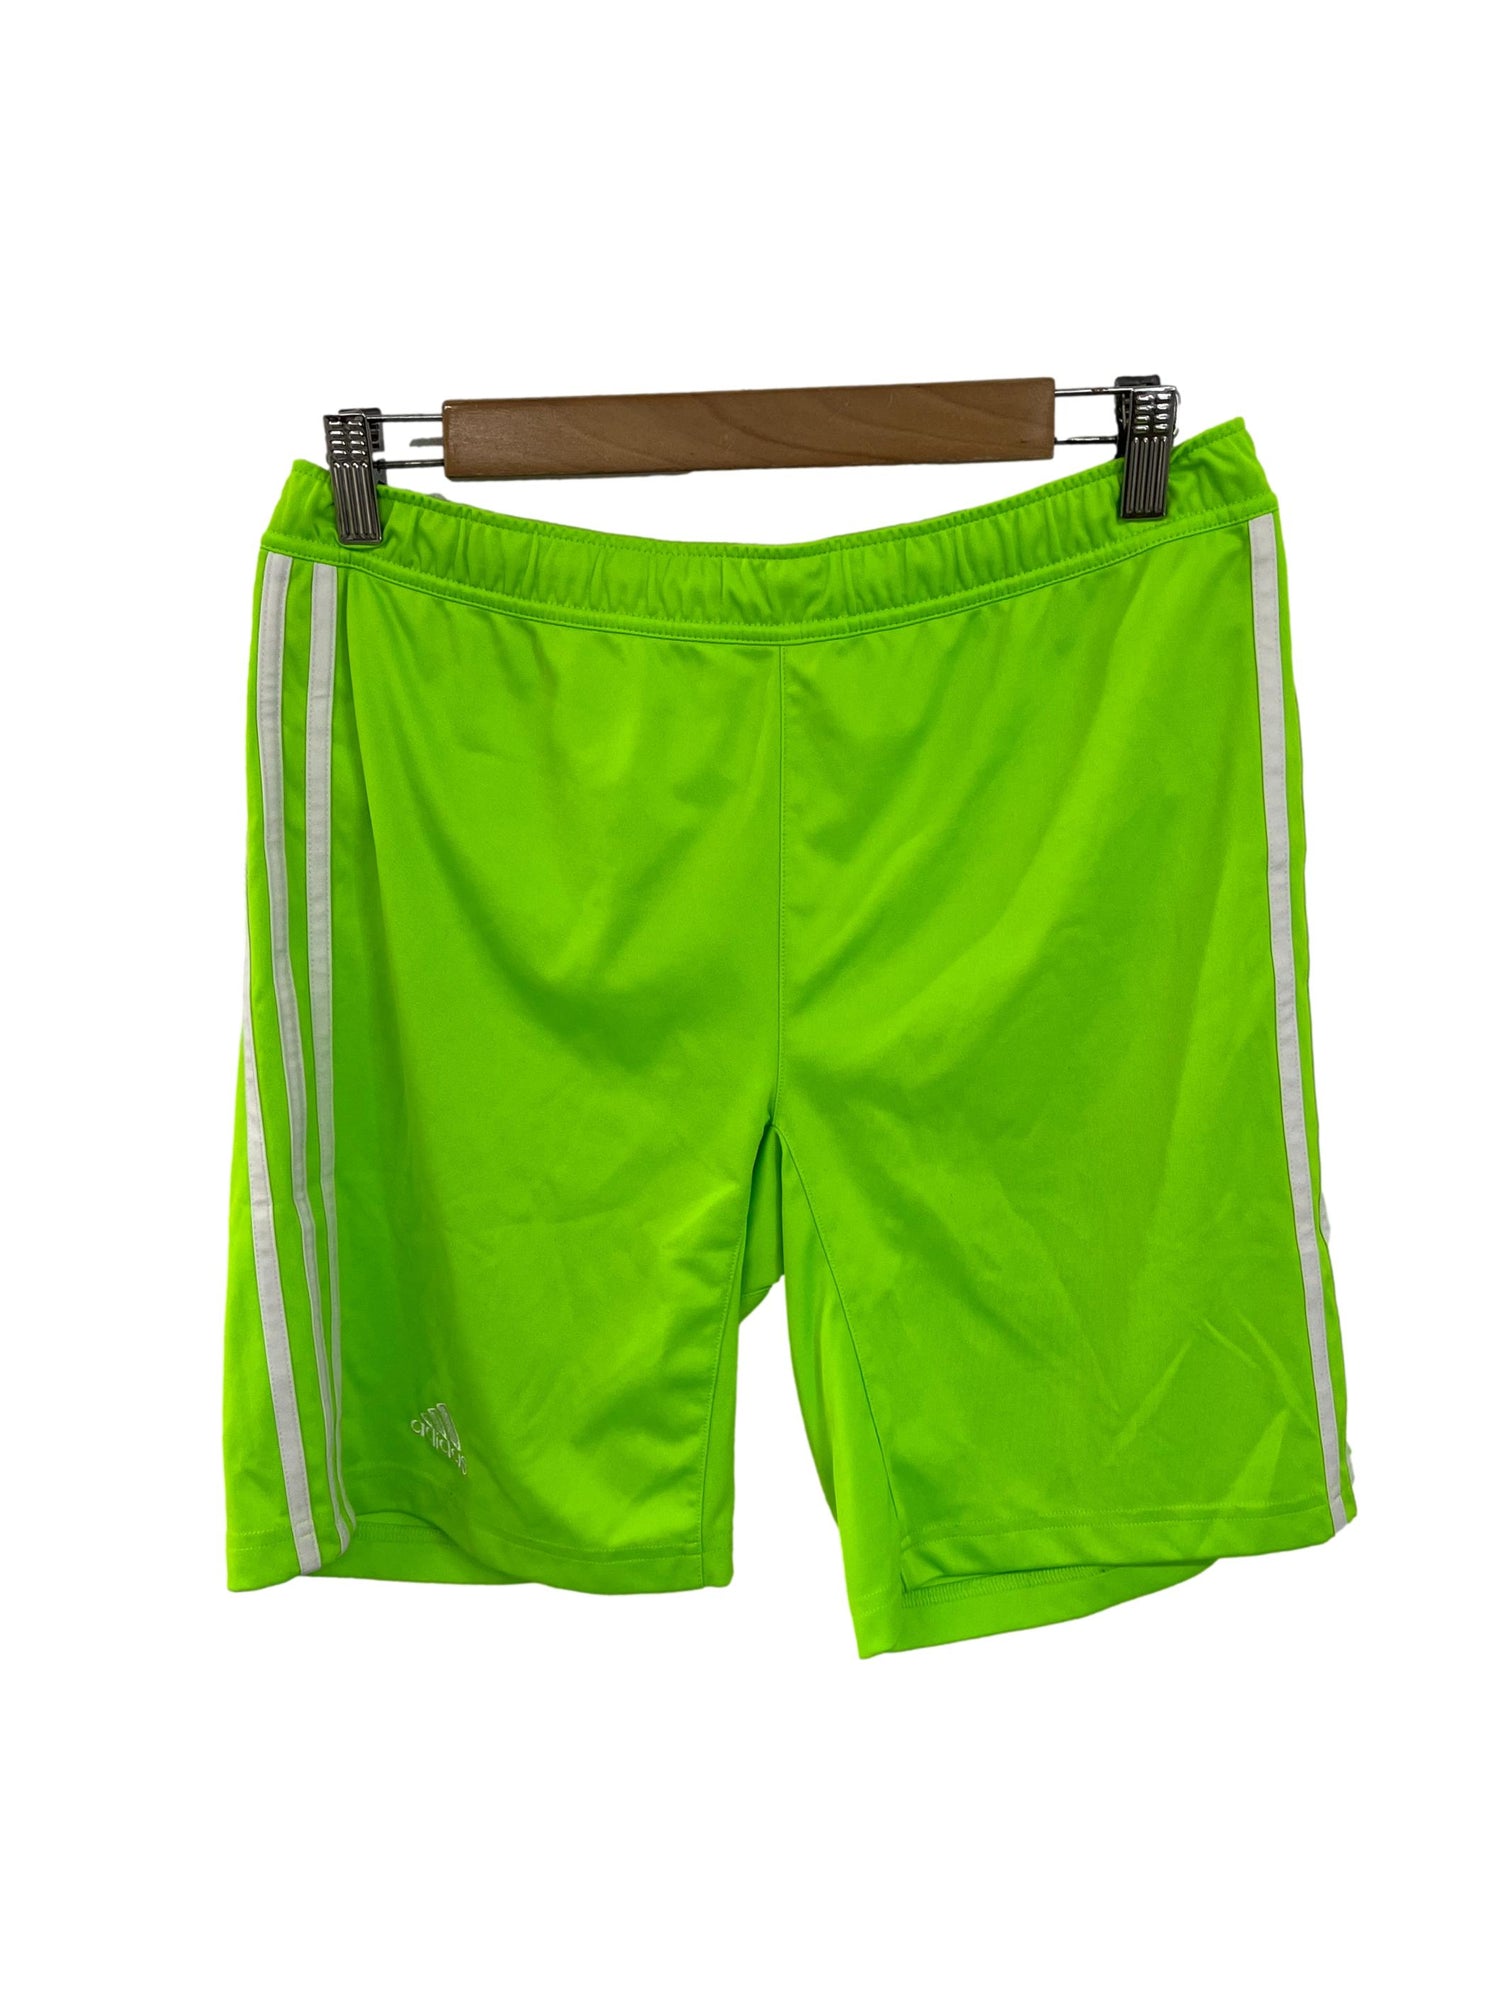 Adidas Neon Green Running Shorts, Men's Fashion, Activewear on Carousell